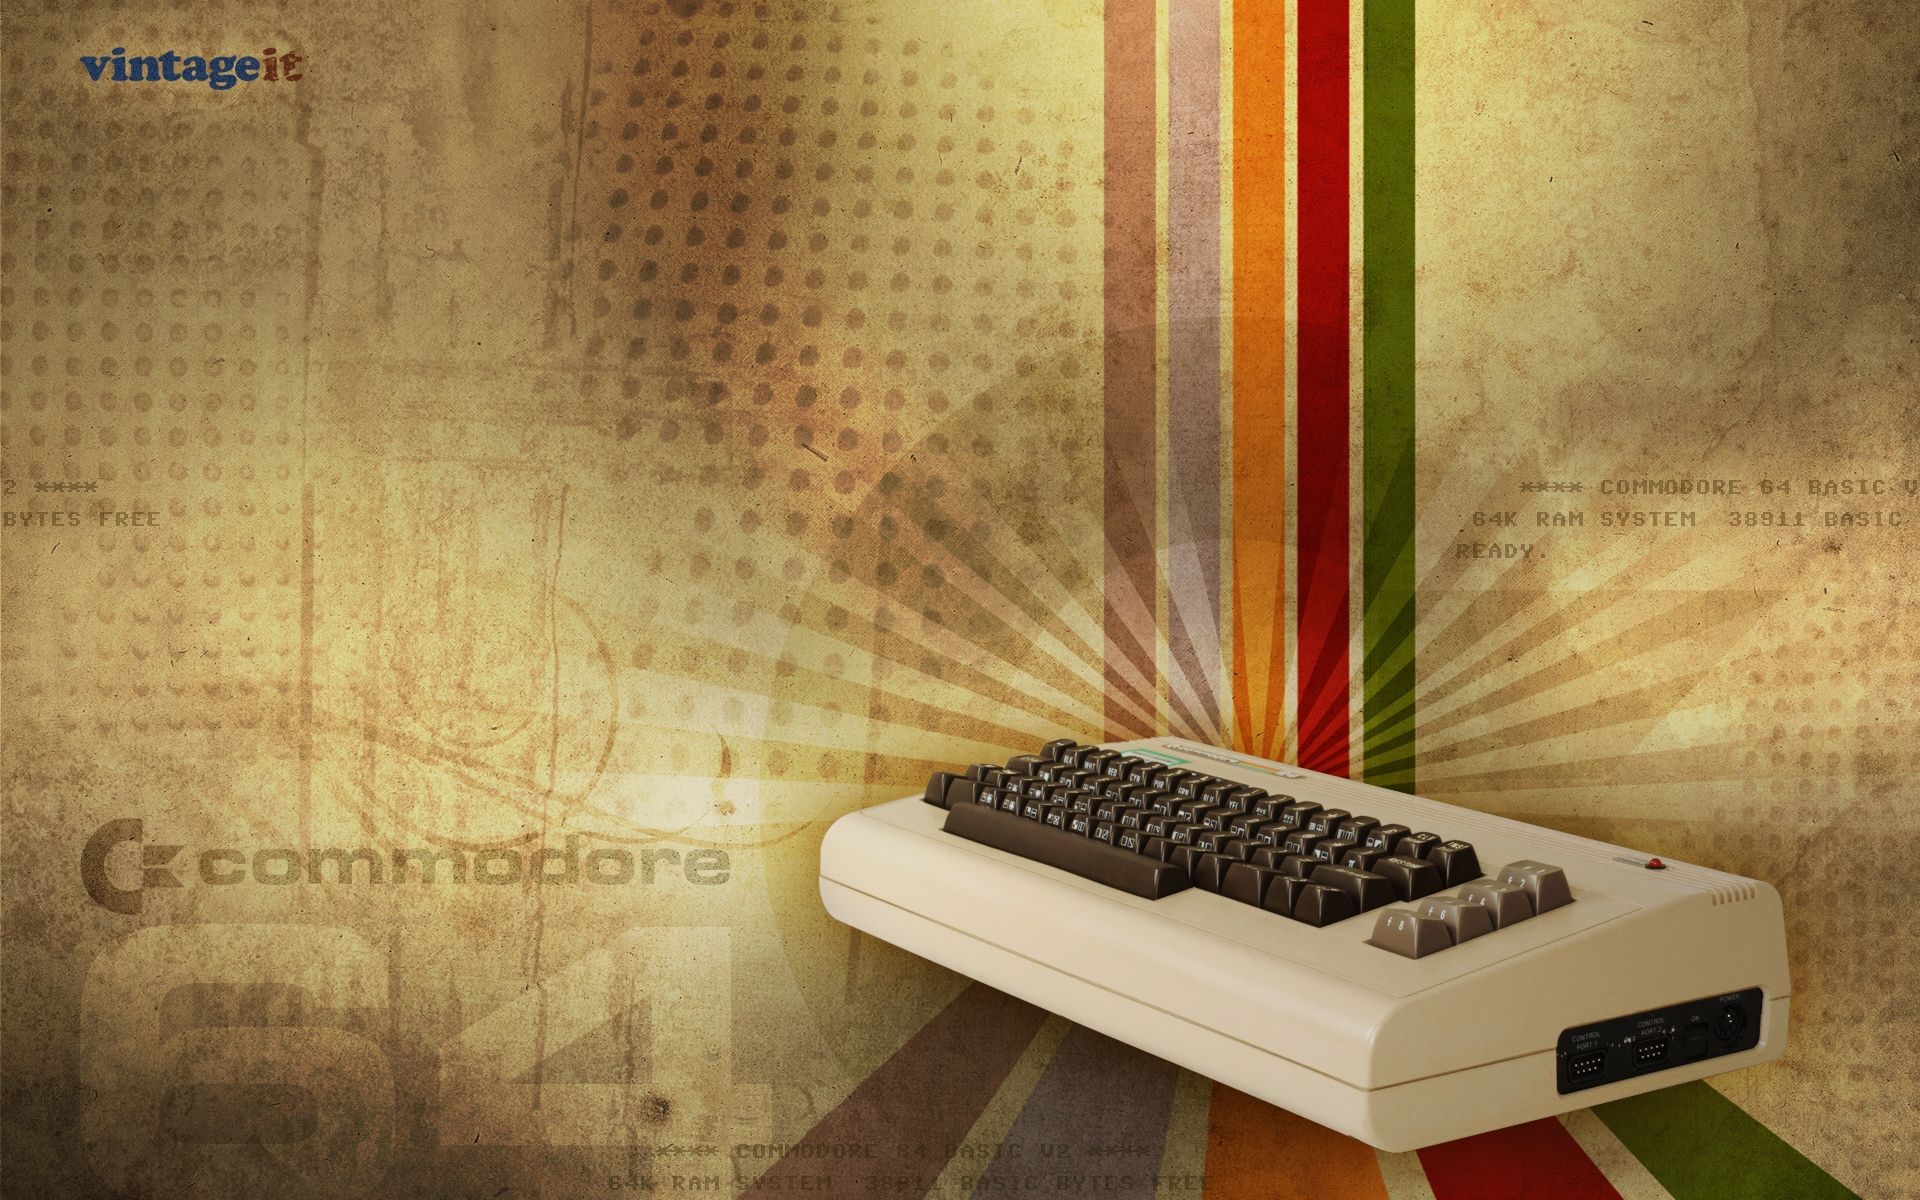 Commodore, vintage, computer